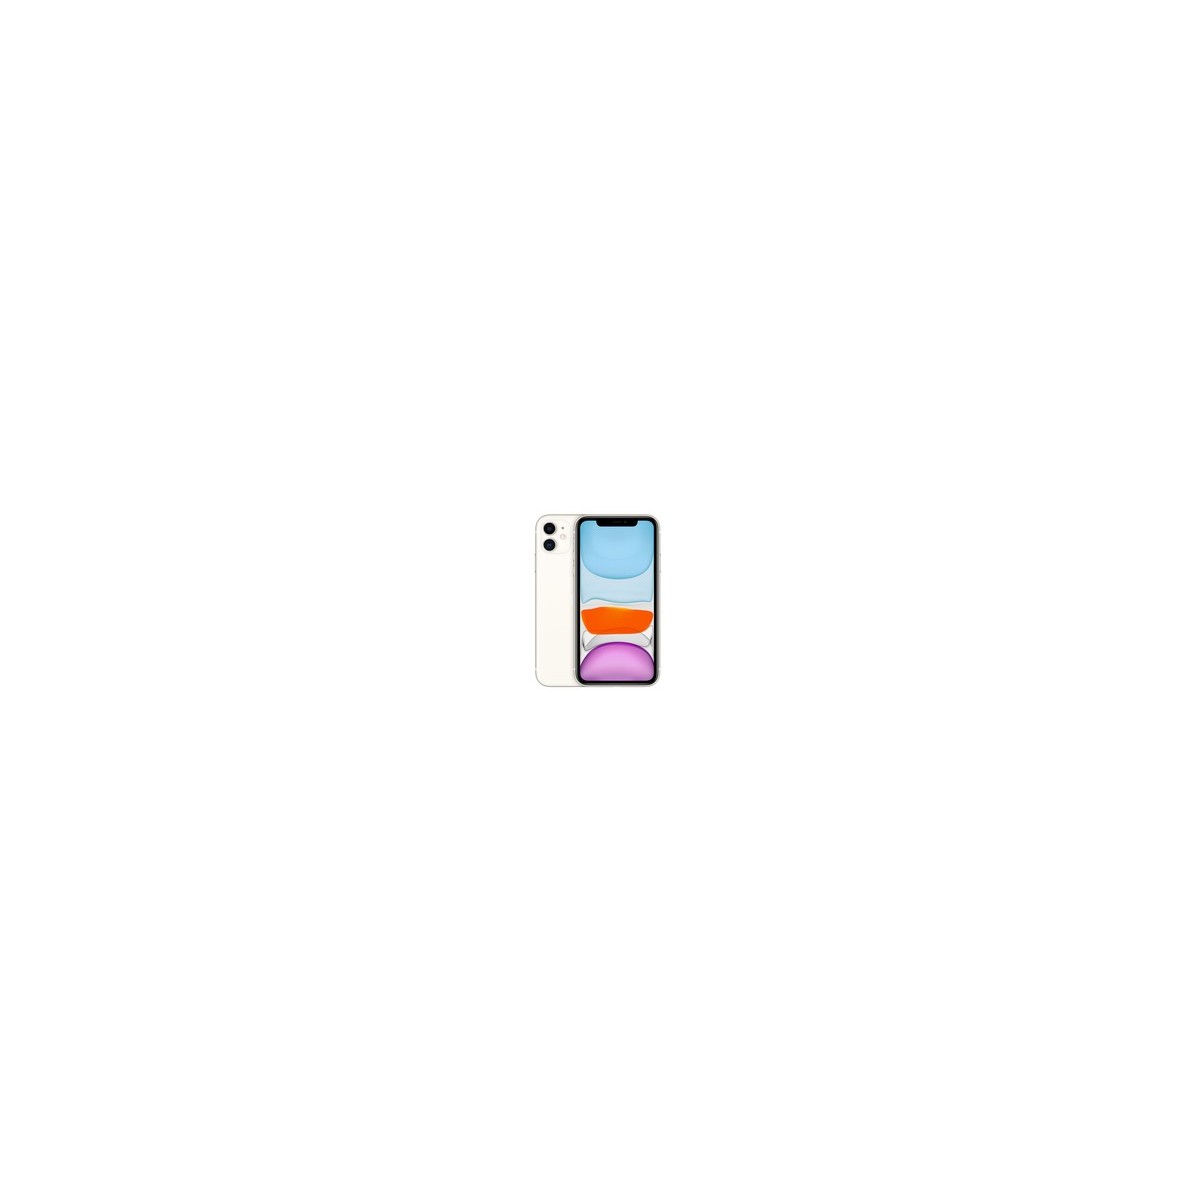 Apple iPhone 11 - 15,5 cm (6.1 Zoll) - 1792 x 828 Pixel - 64 GB - 12 MP - iOS 13 - Weiß